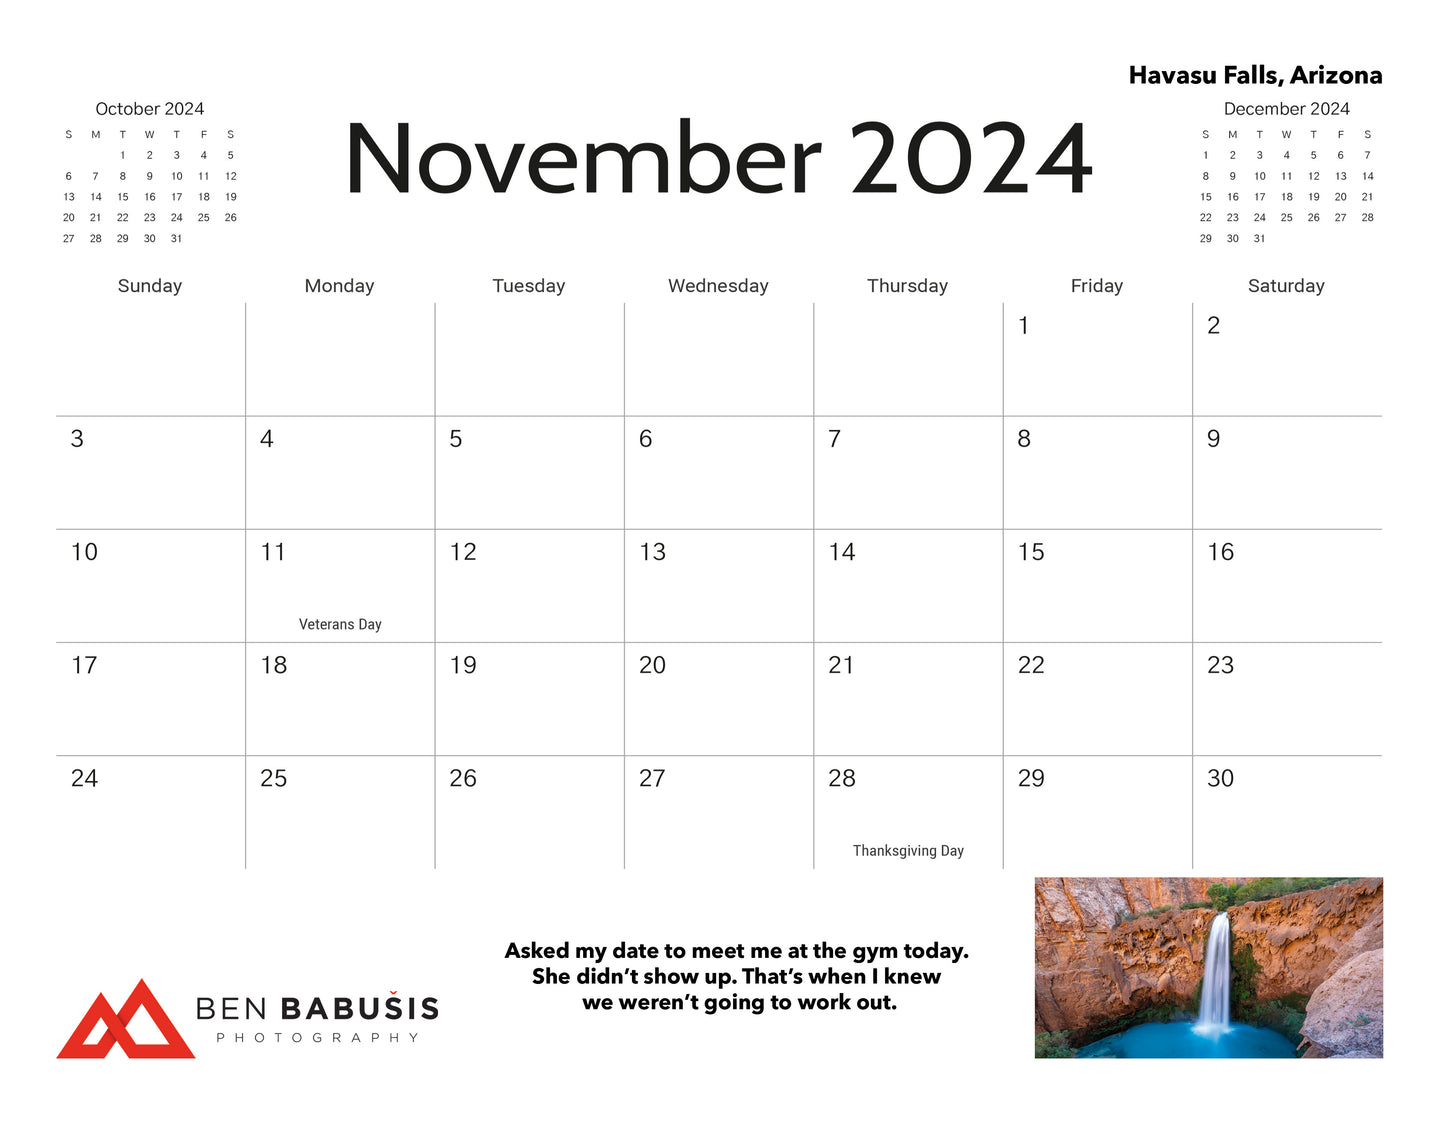 FREE 2024 Outdoor Photography Wall Calendar